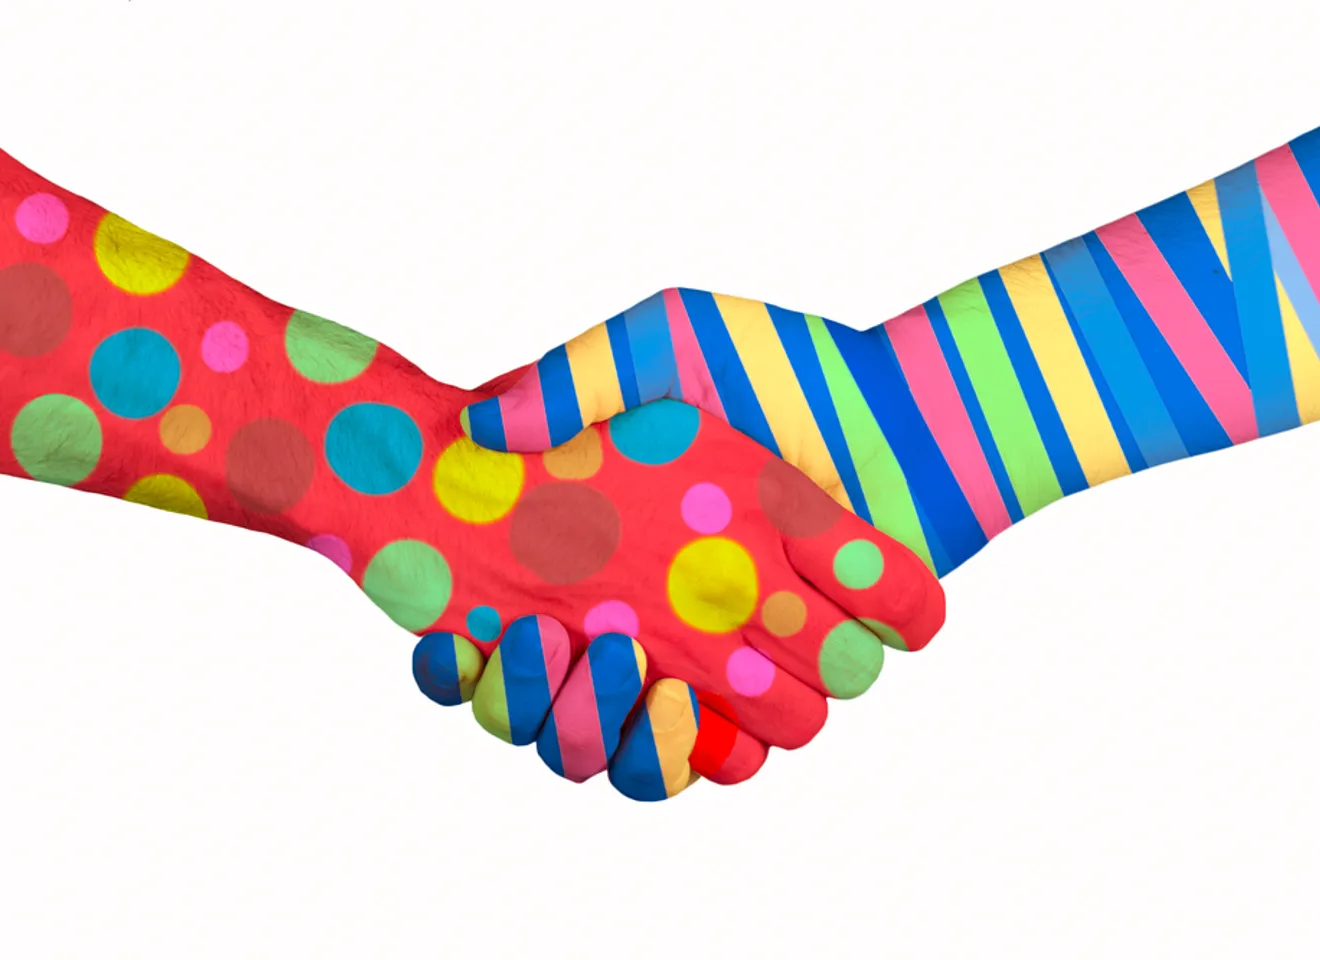 Colorful handshake